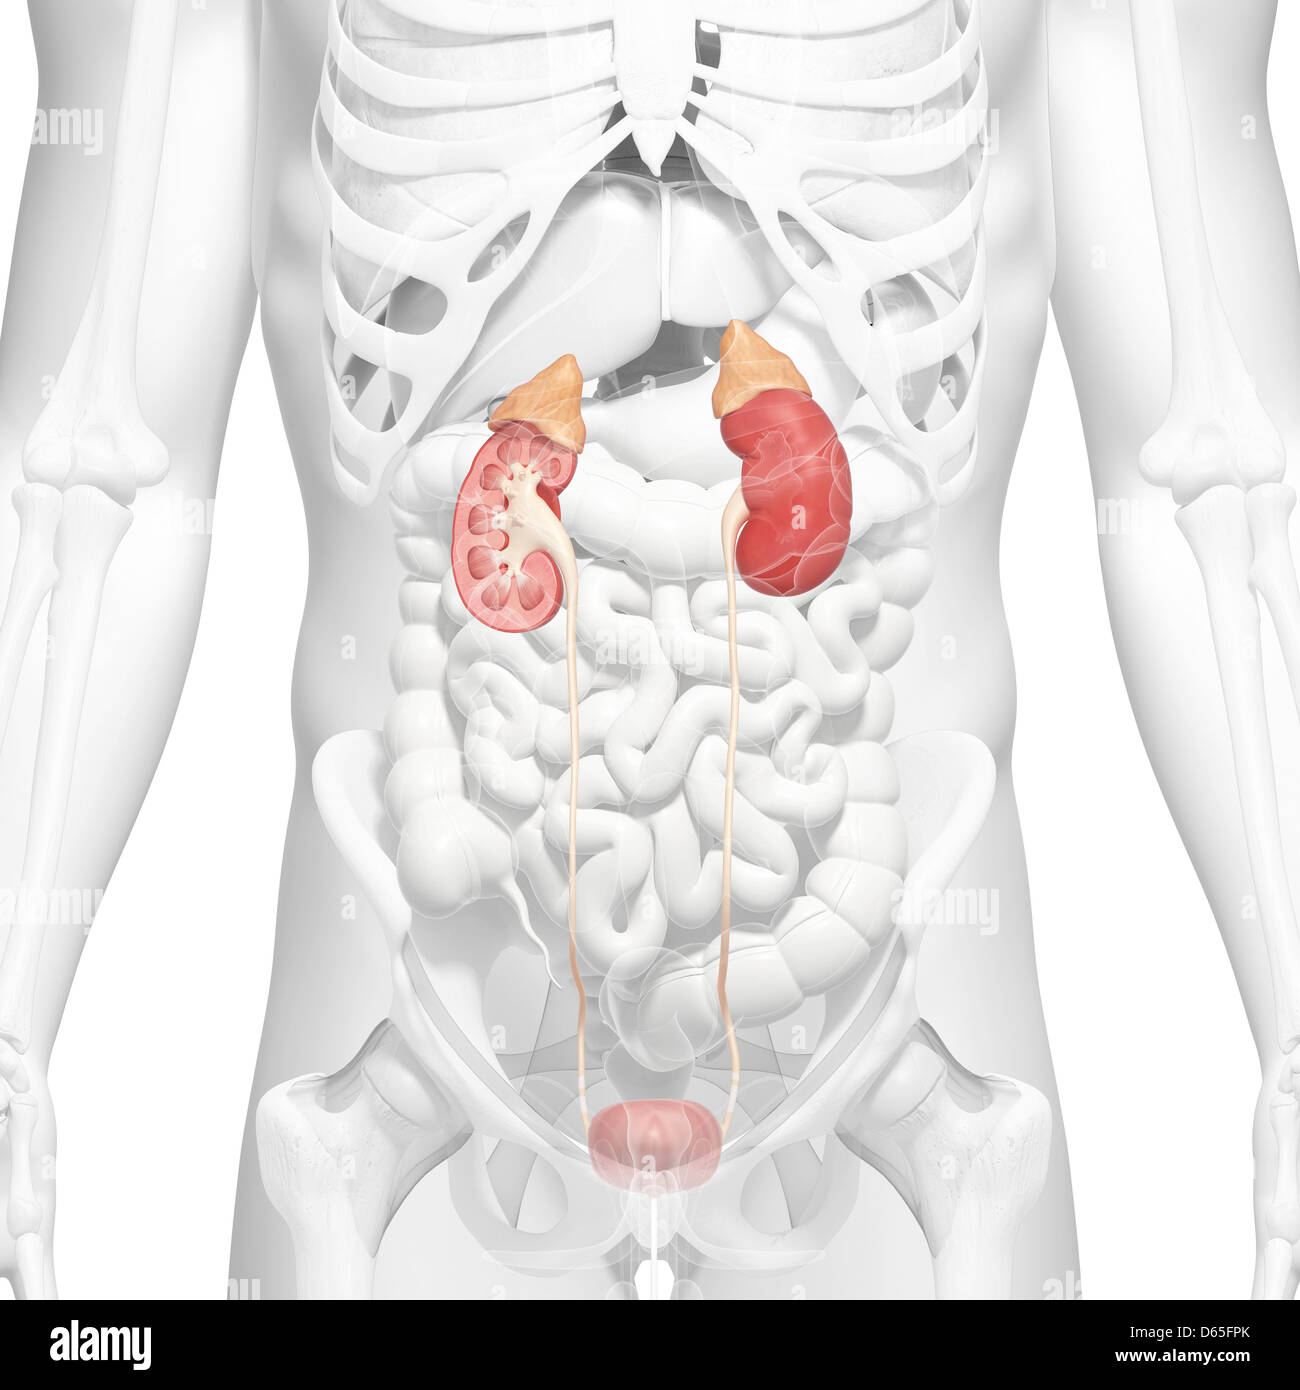 Male urinary system, artwork Stock Photo